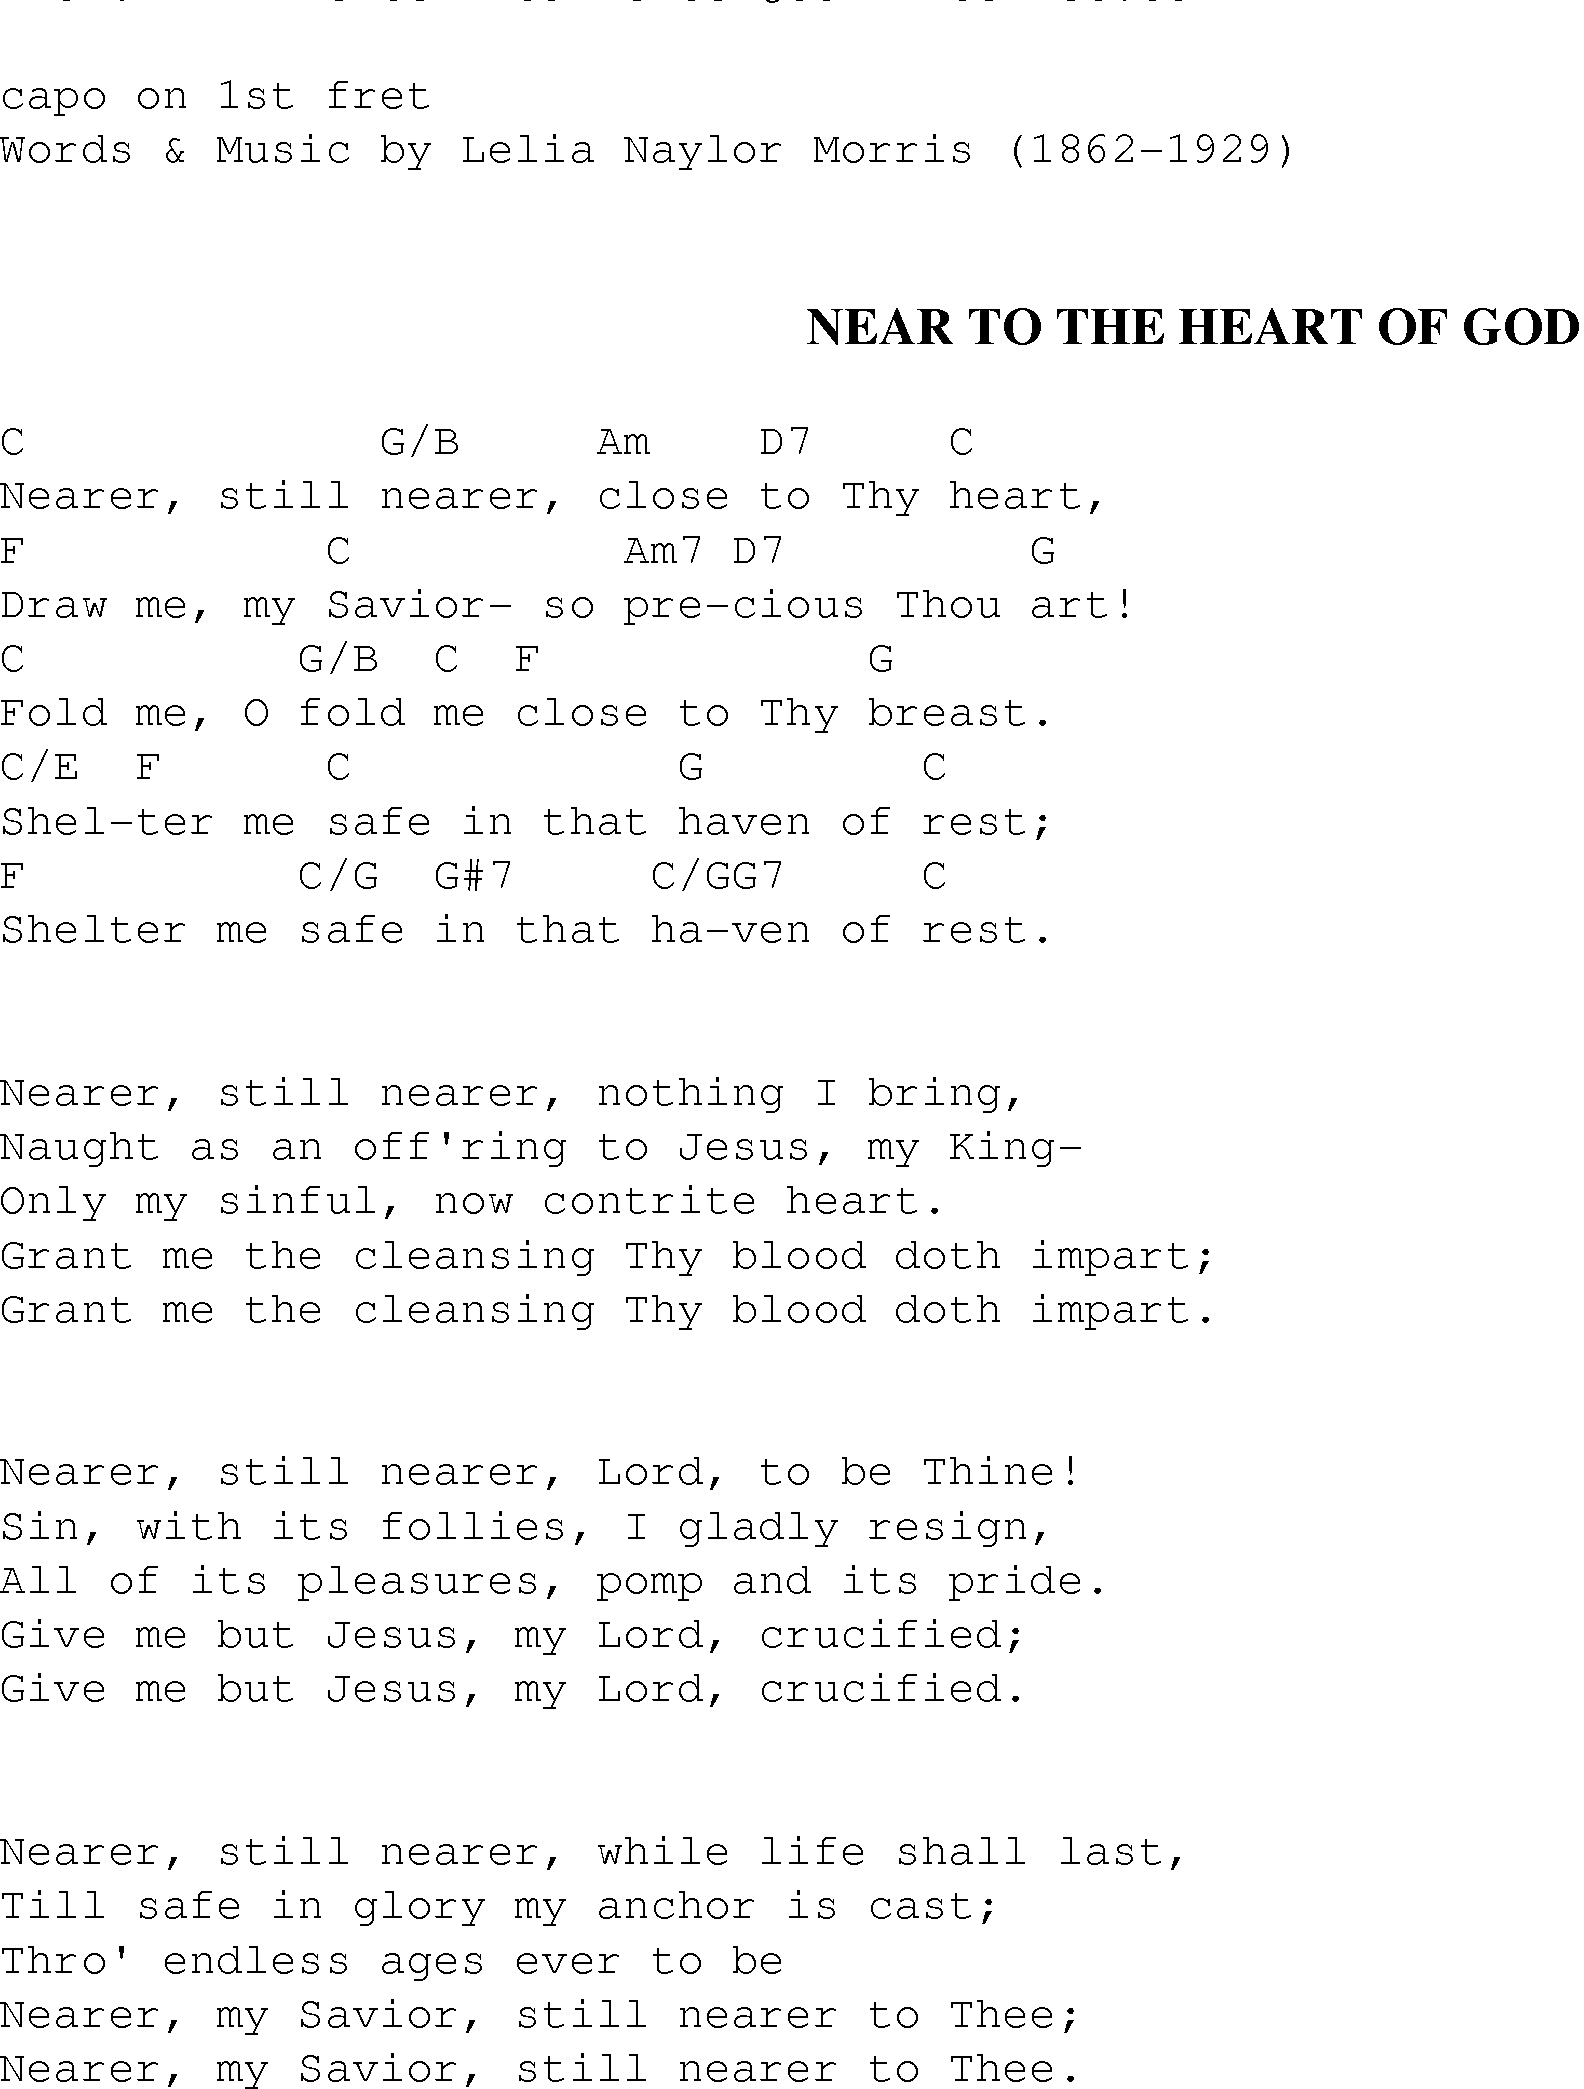 Gospel Song: nearer_to_the_heart_of_god, lyrics and chords.